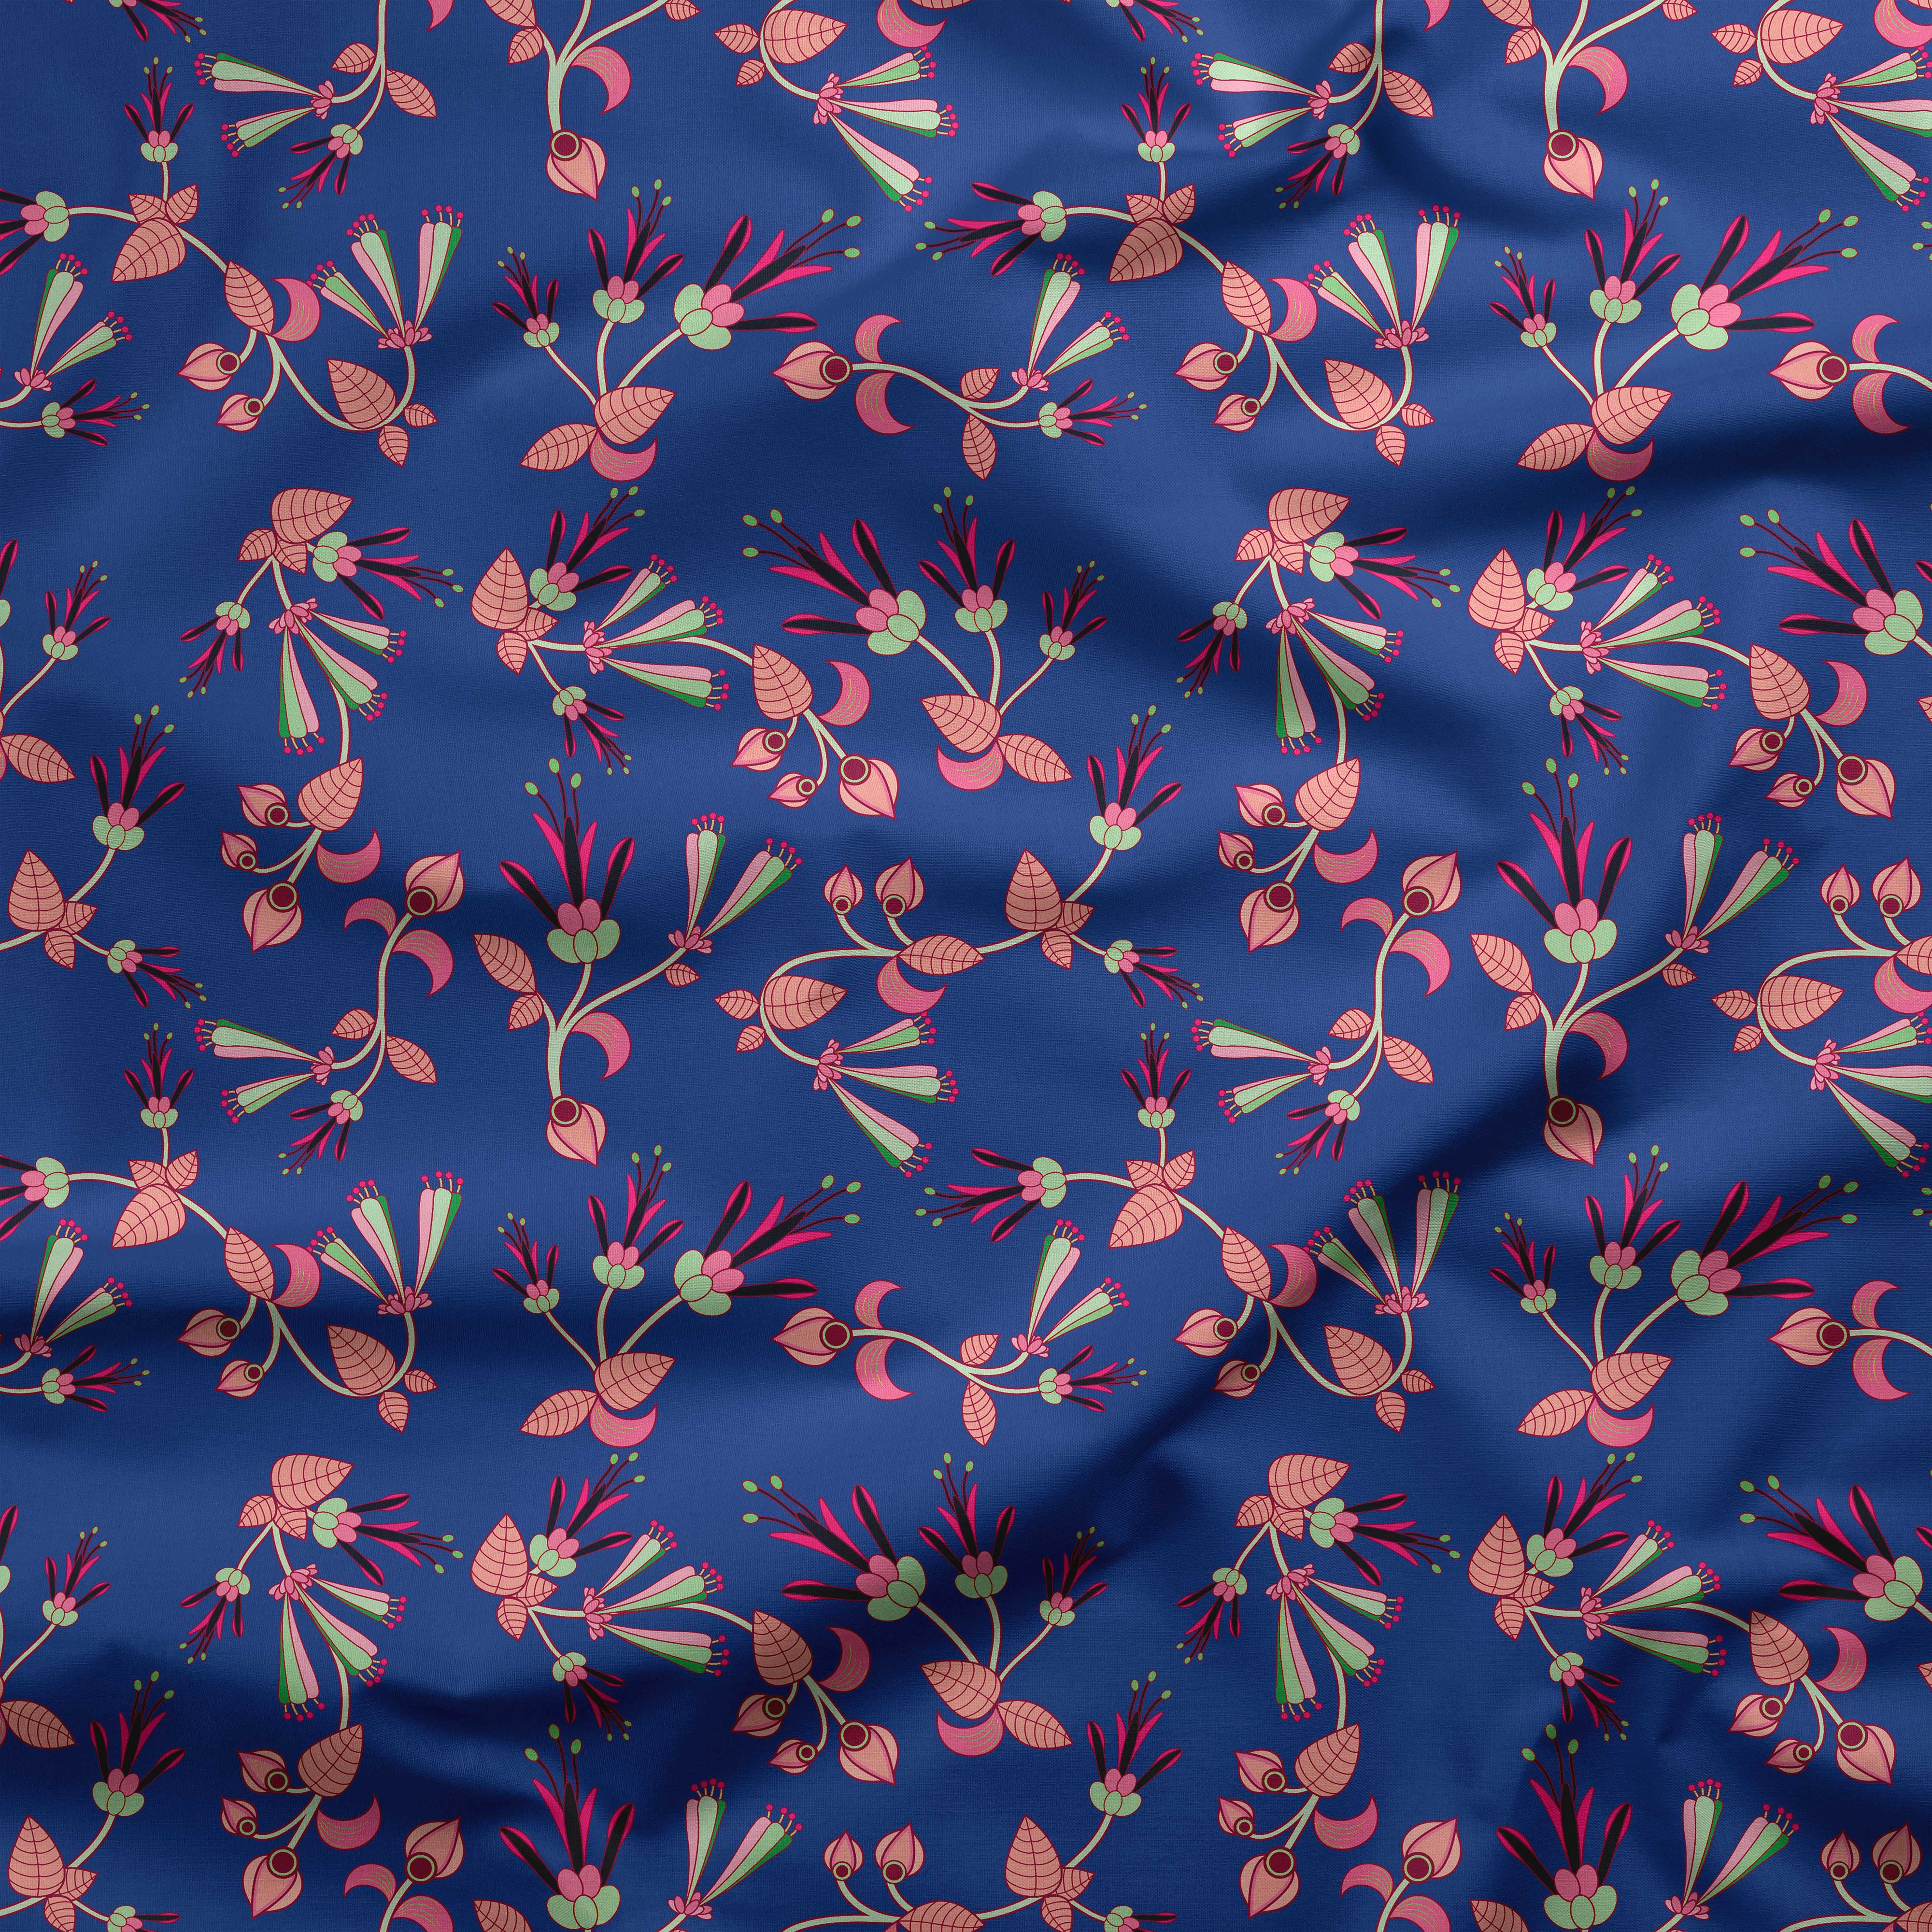 Swift Floral Peach Blue Cotton Poplin Fabric By the Yard Fabric NBprintex 